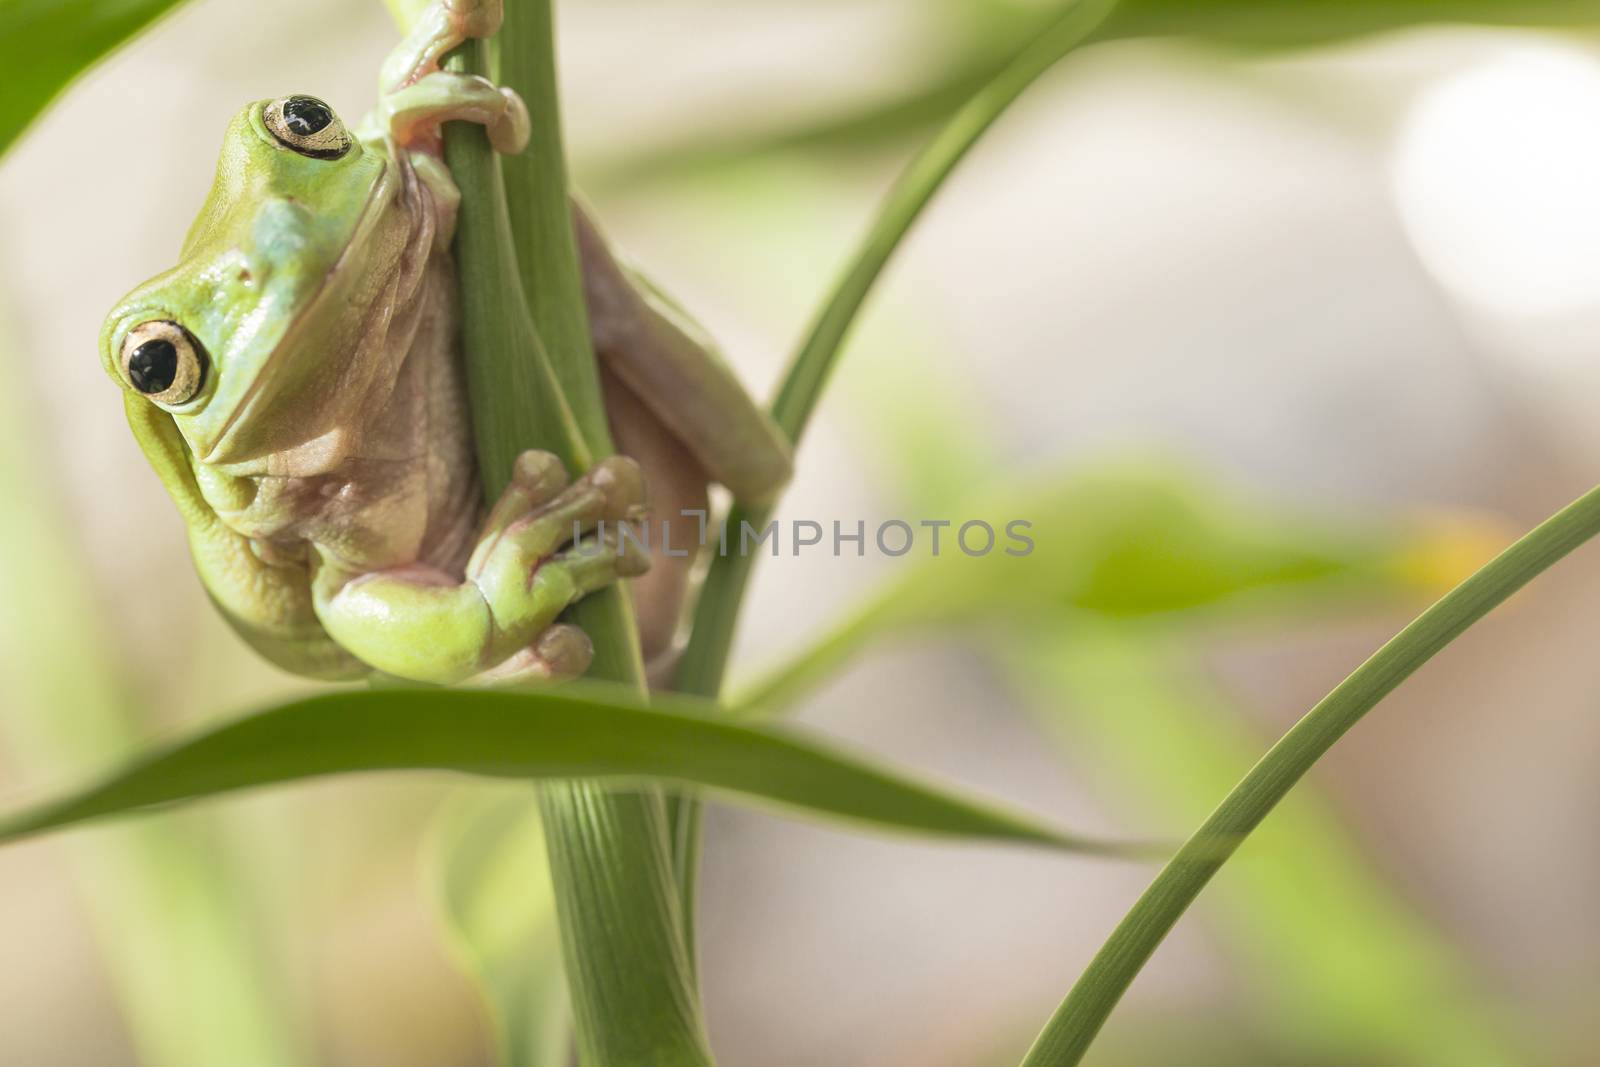 Australian Green Tree Frog on a leaf.